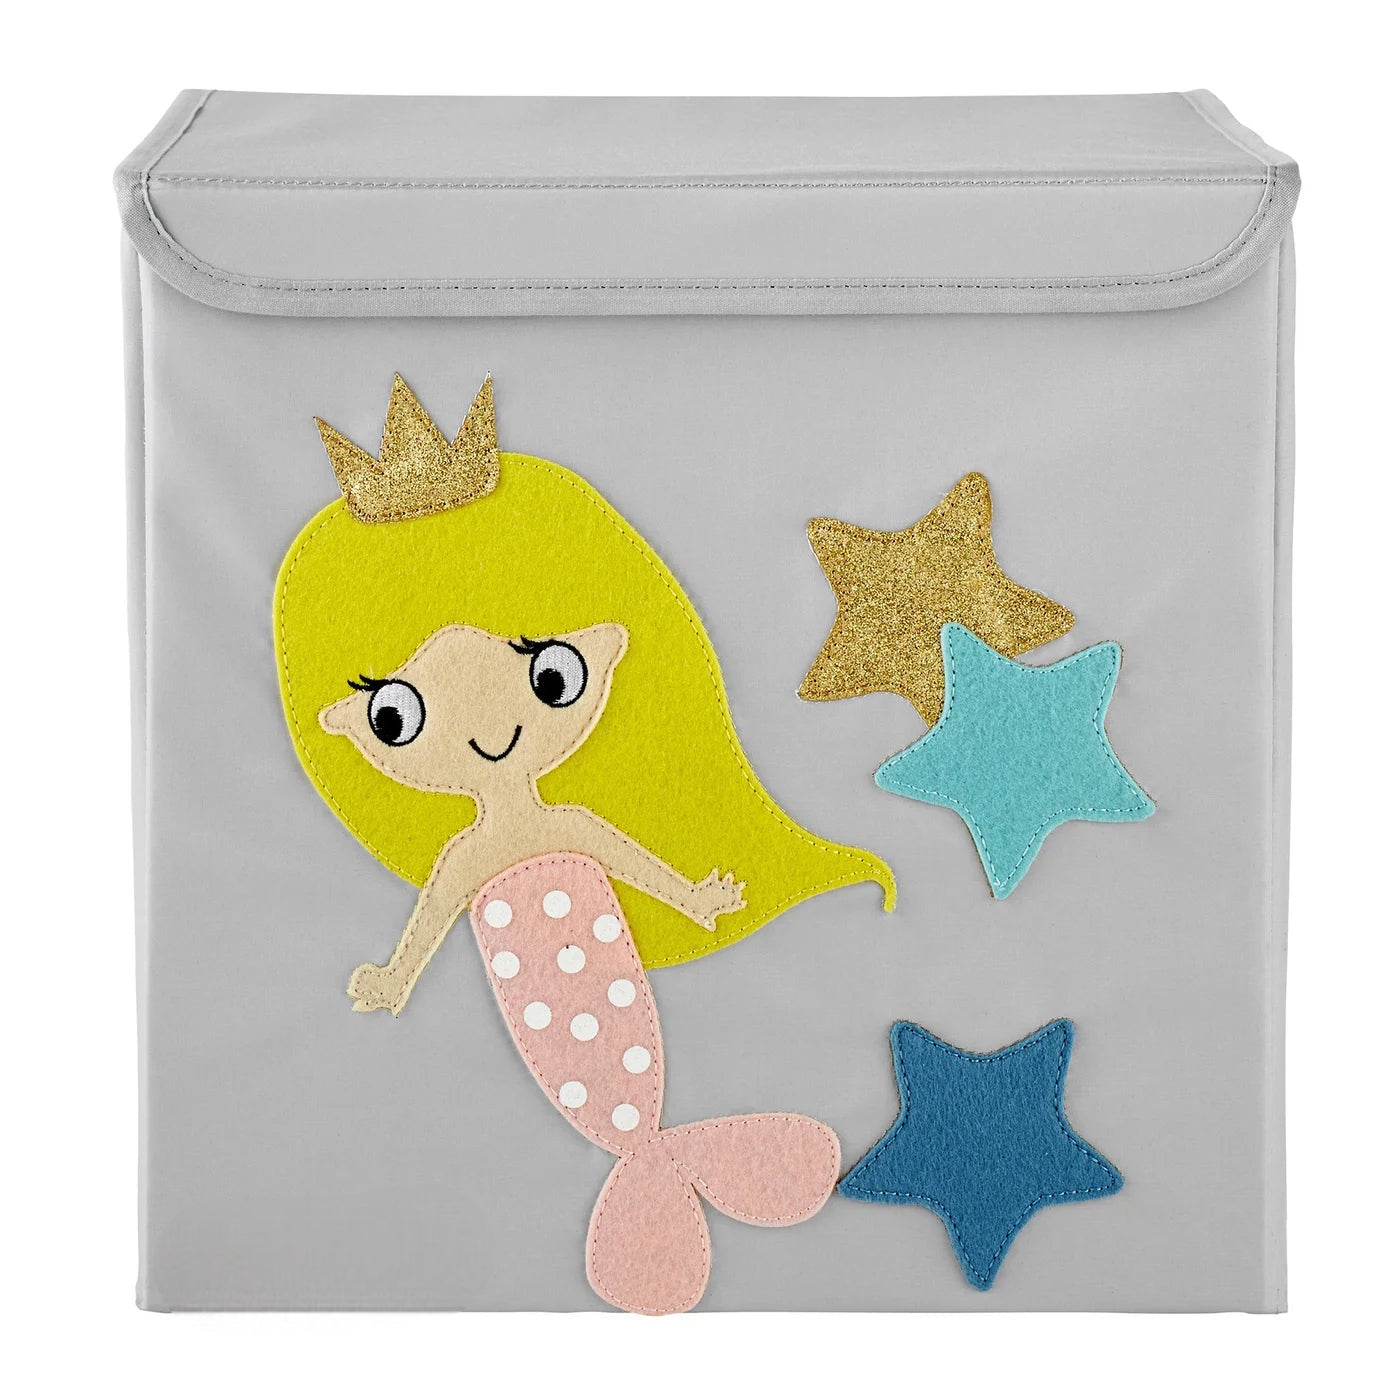 Personalized Storage Box - Mermaid